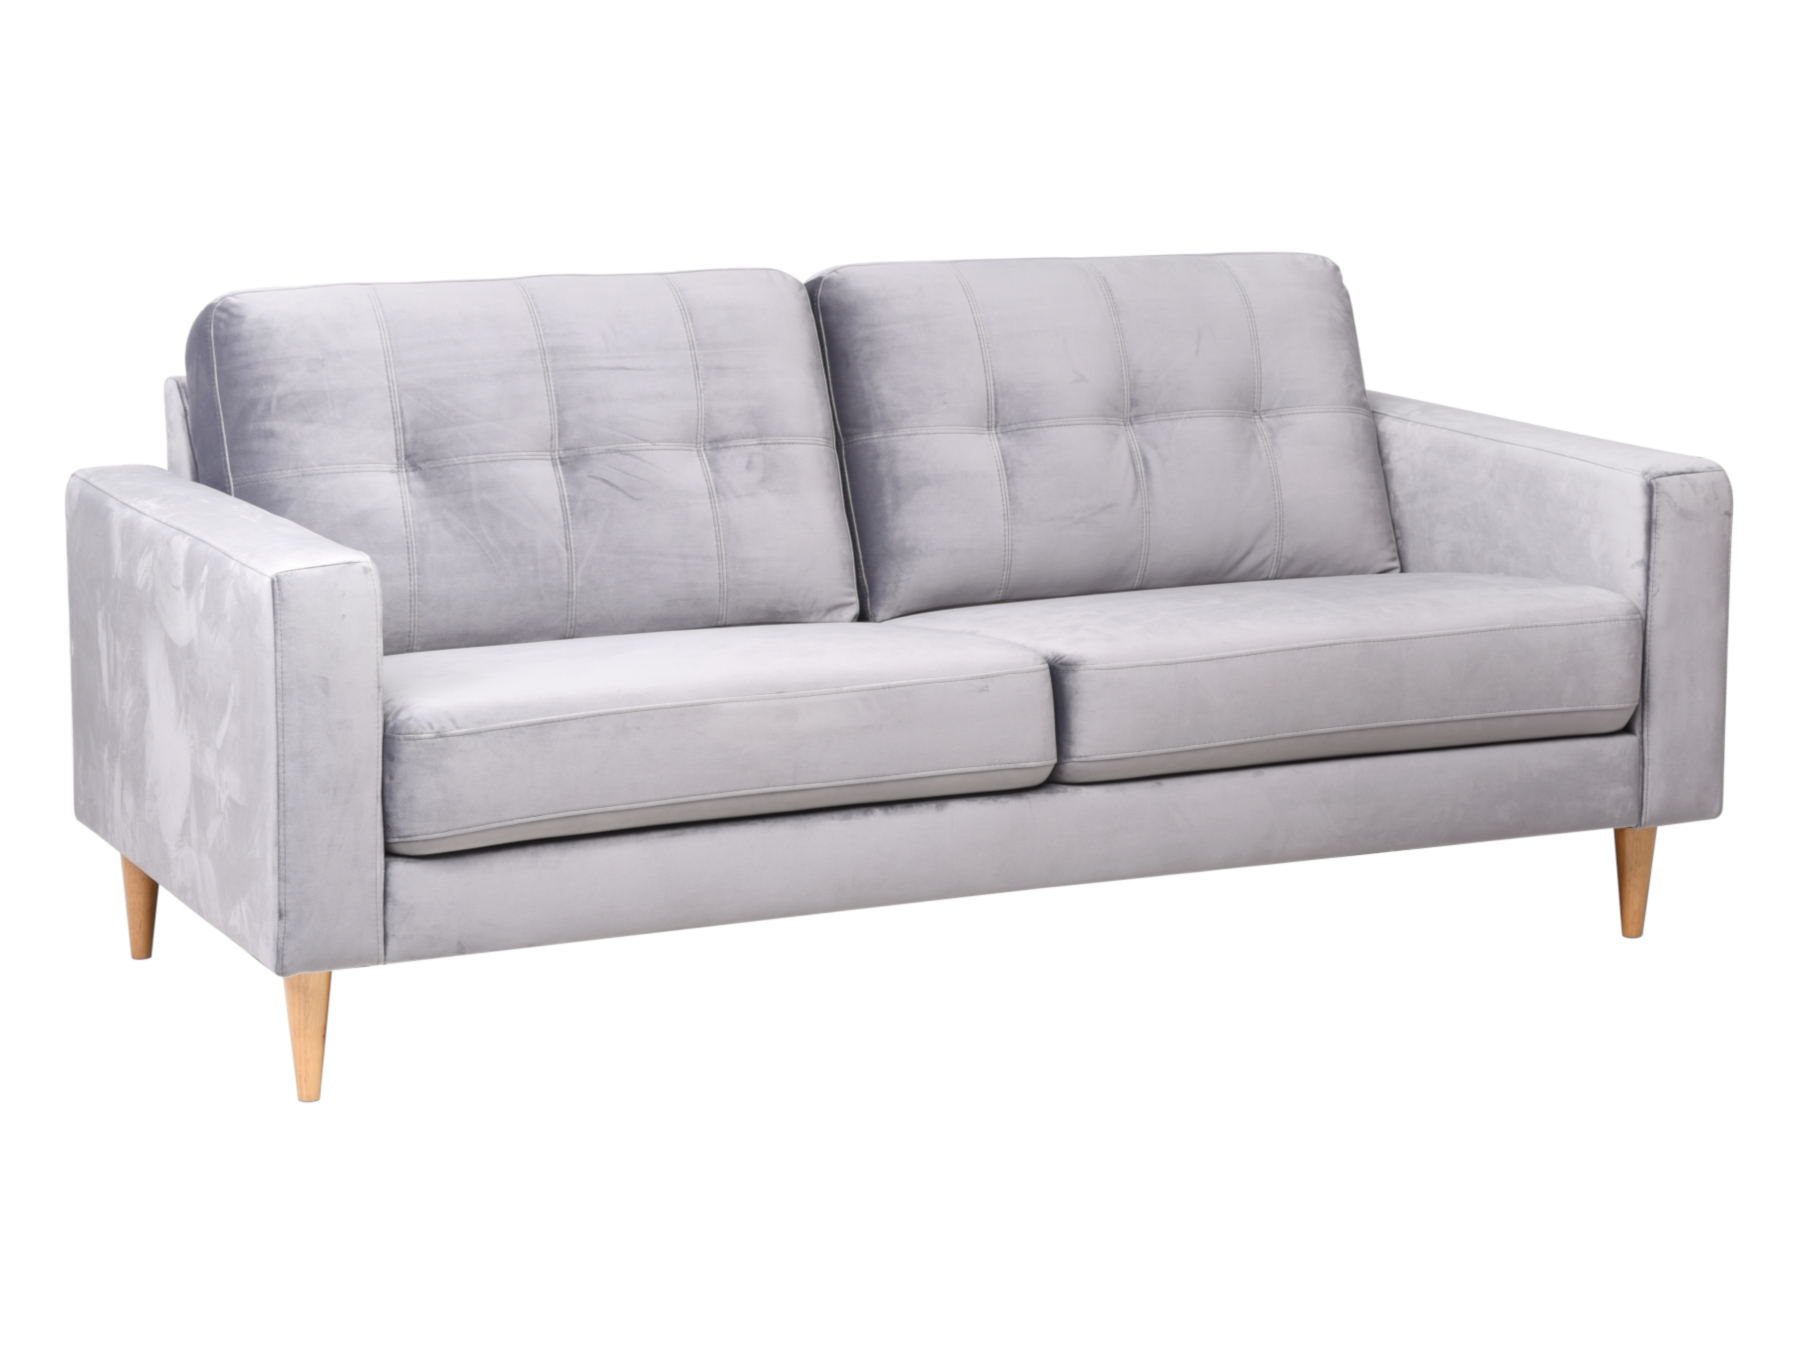 25134 - sofa - grey